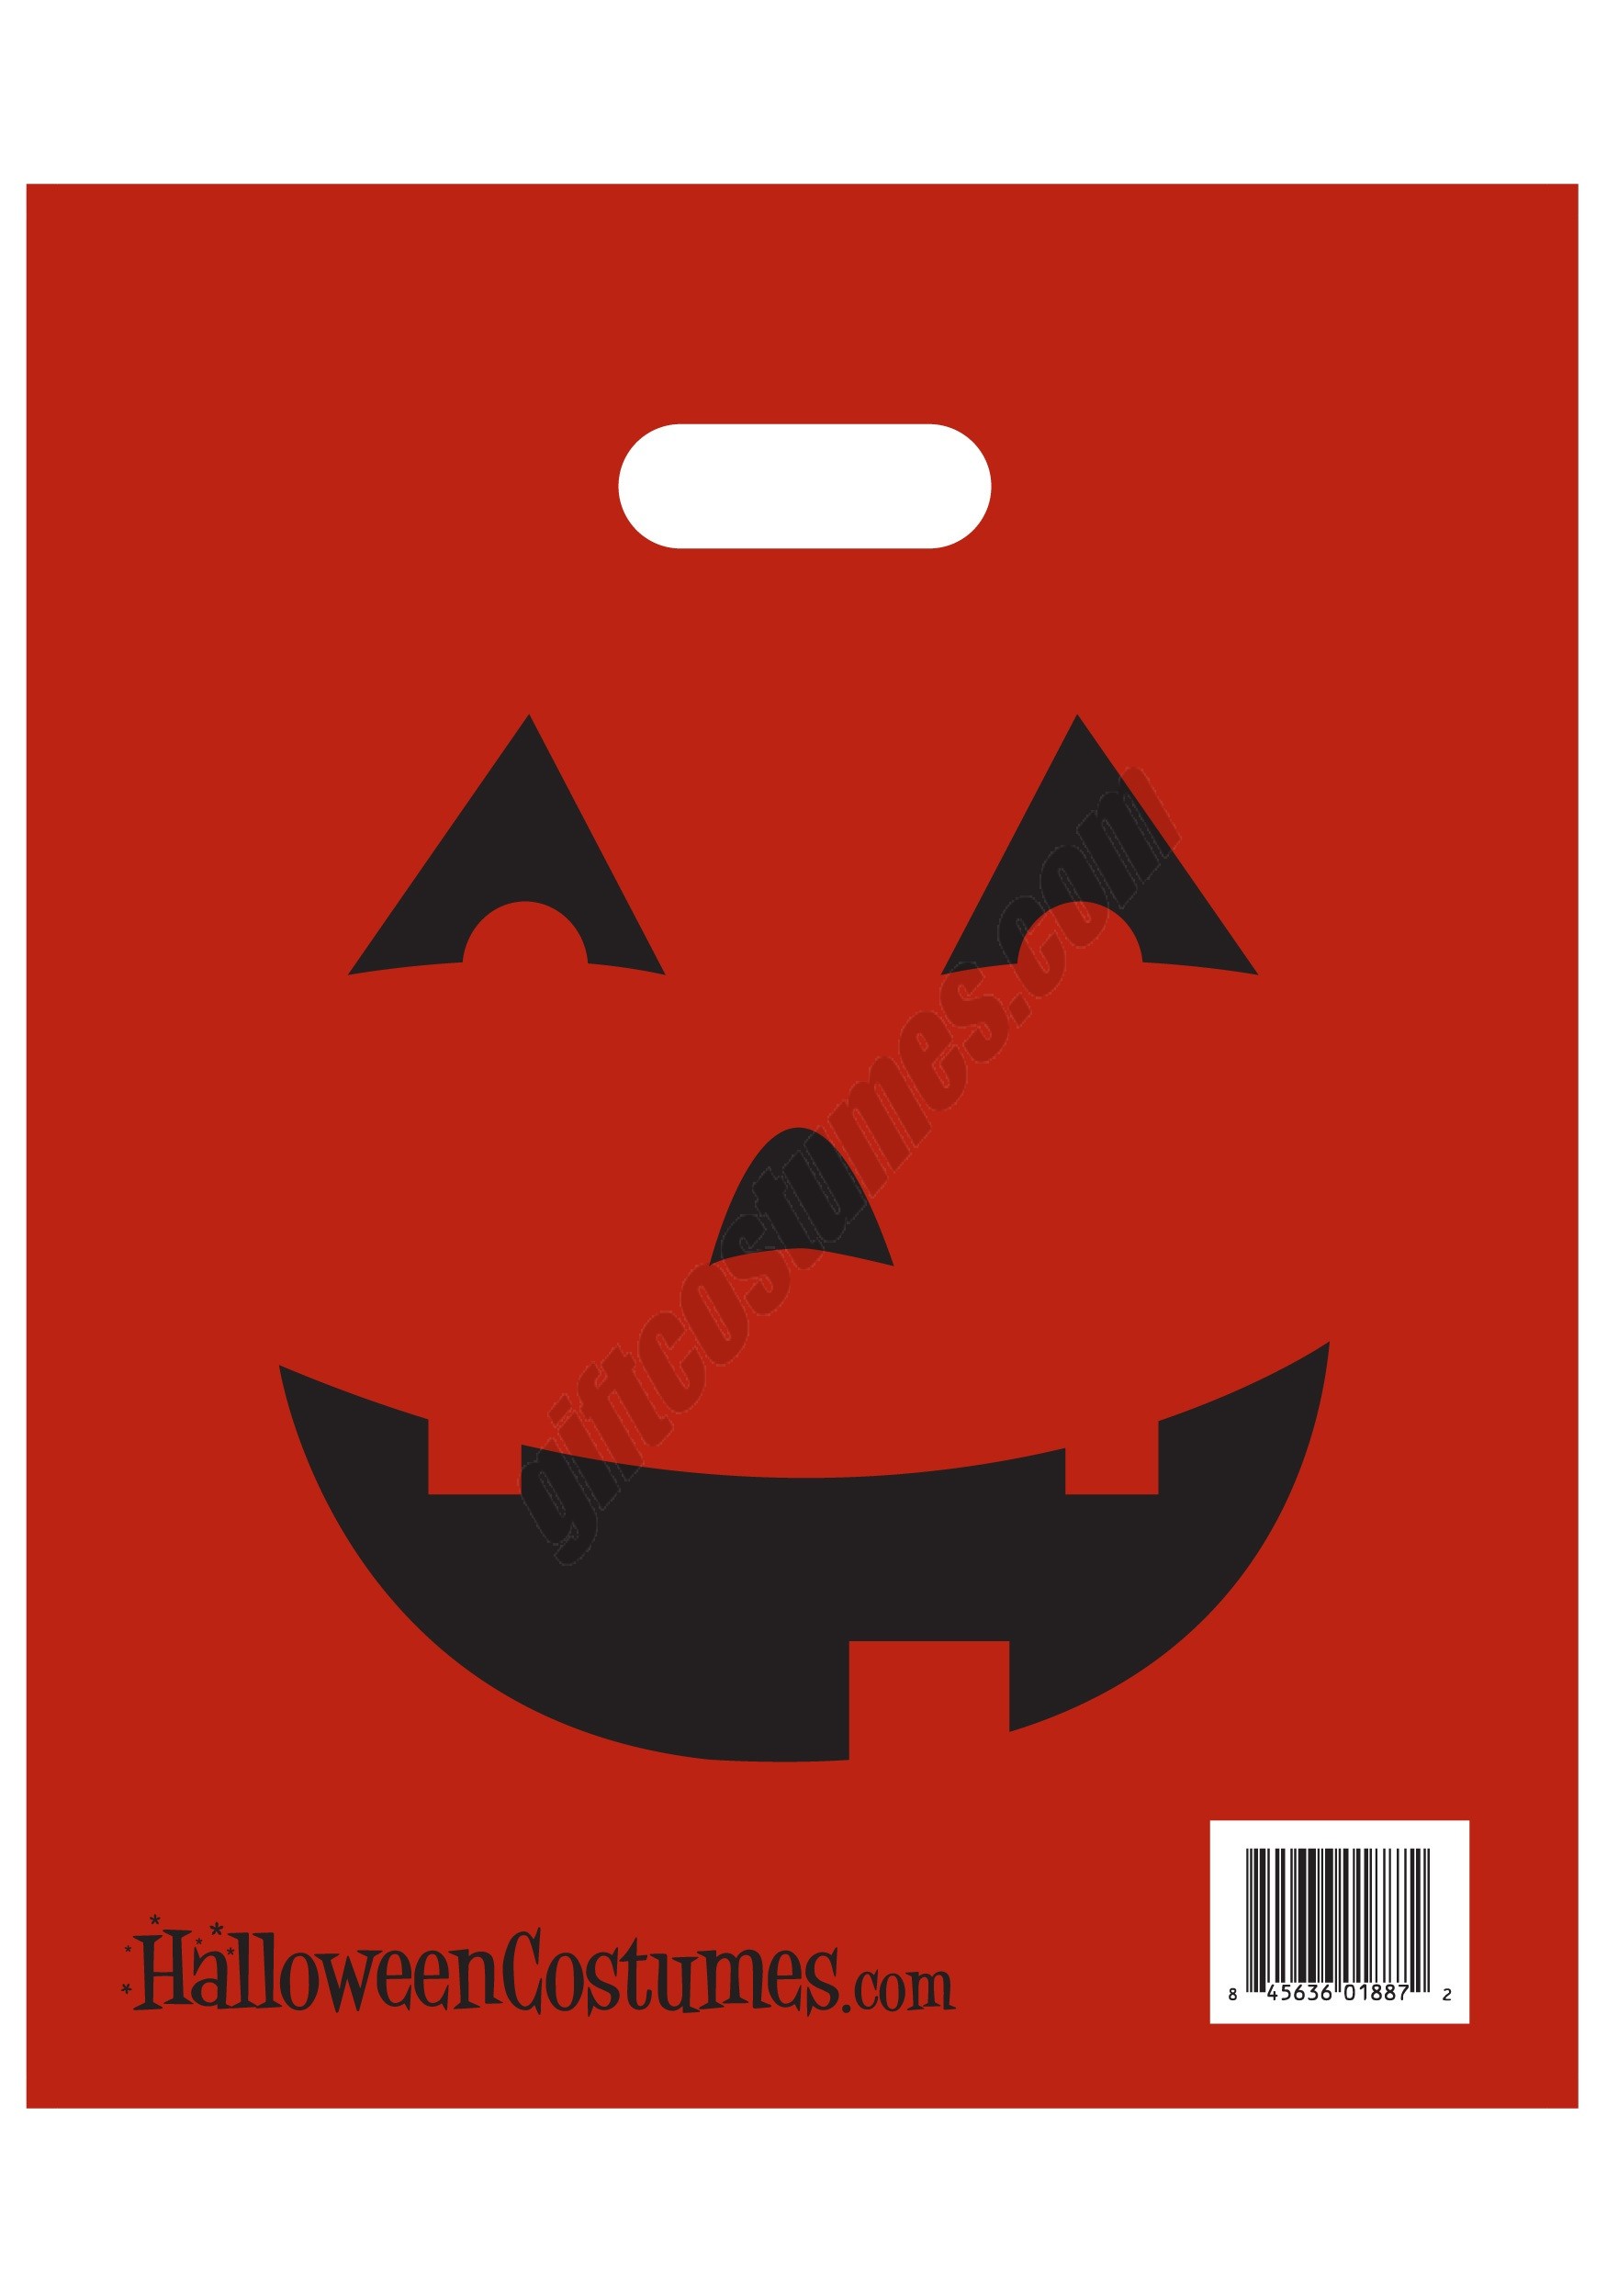 Halloween Pumpkin Trick or Treat Bag Promotions - Halloween Pumpkin Trick or Treat Bag Promotions